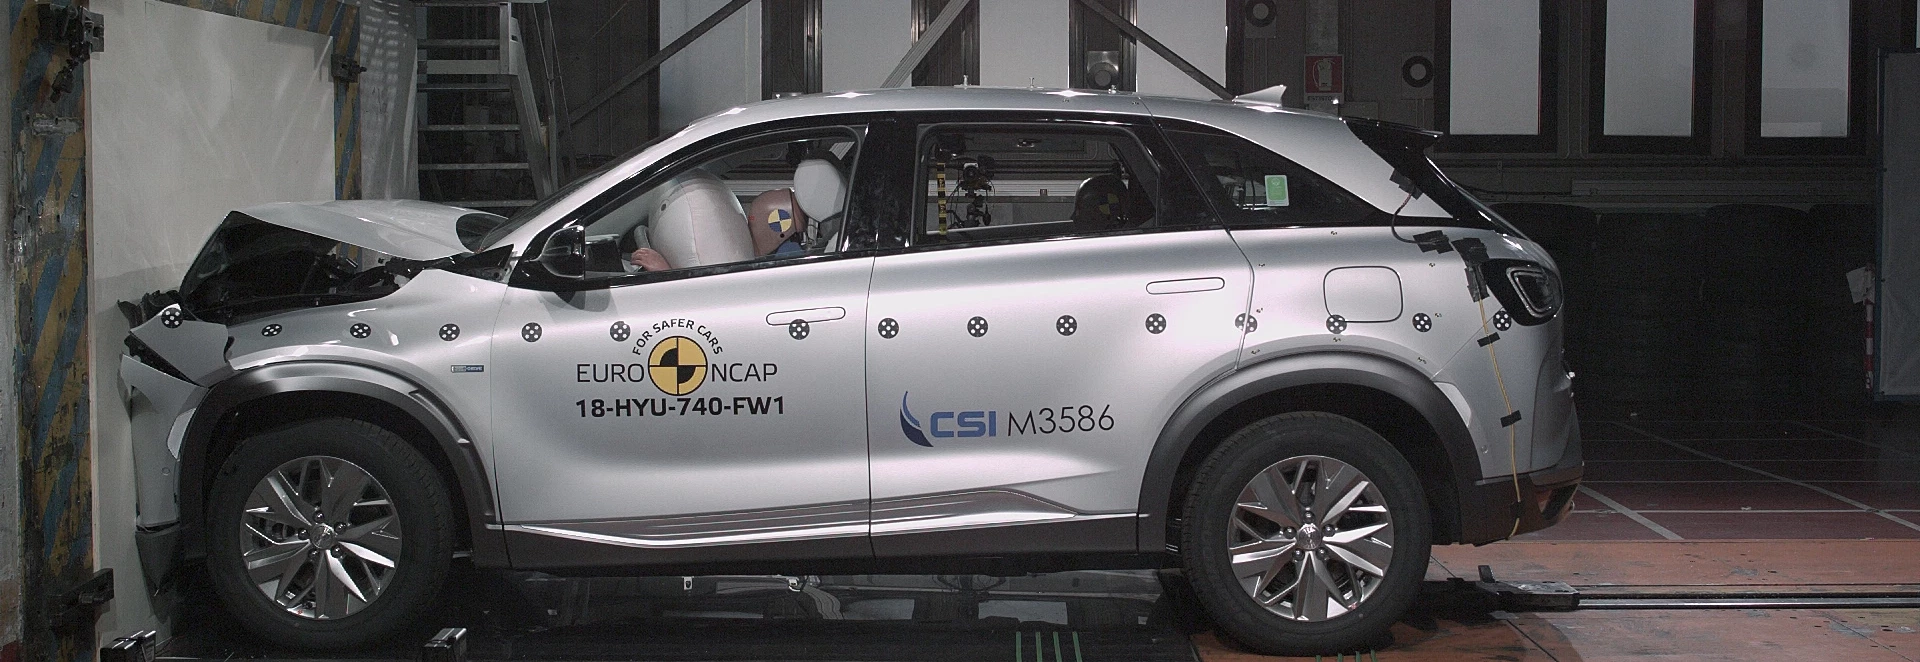 Hyundai Nexo gains 5 star safety rating from Euro NCAP tests